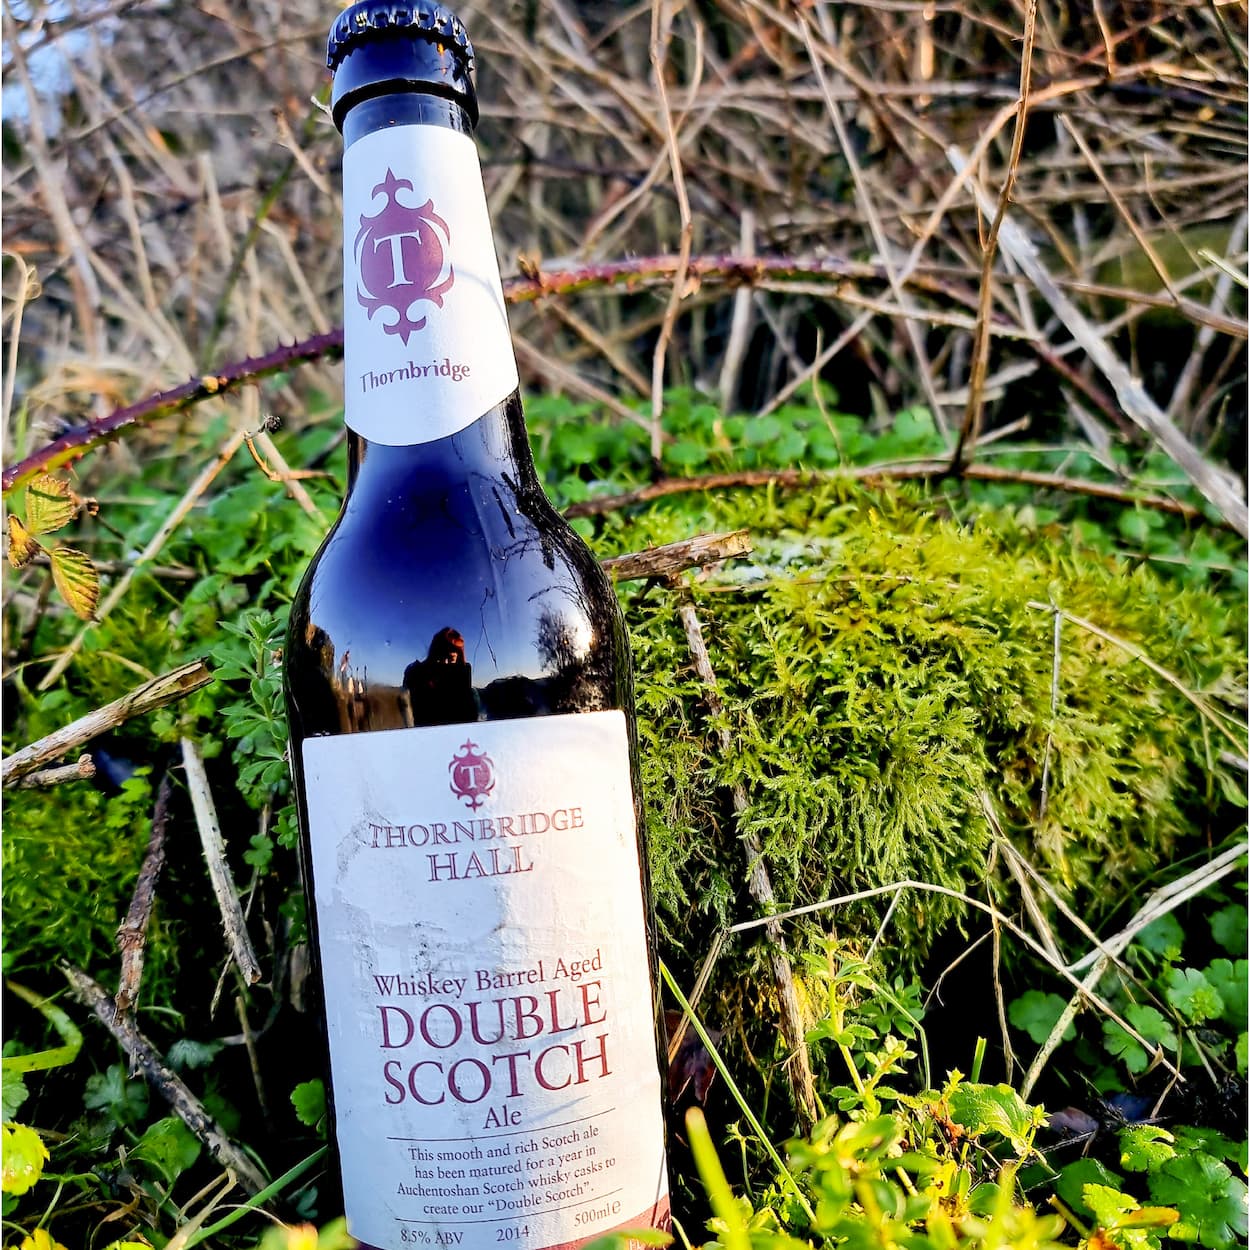 Double Scotch, 8.5% Whisky Barrel Aged Double Scotch Ale 500ml bottle Beer - Cellar Reserve Thornbridge